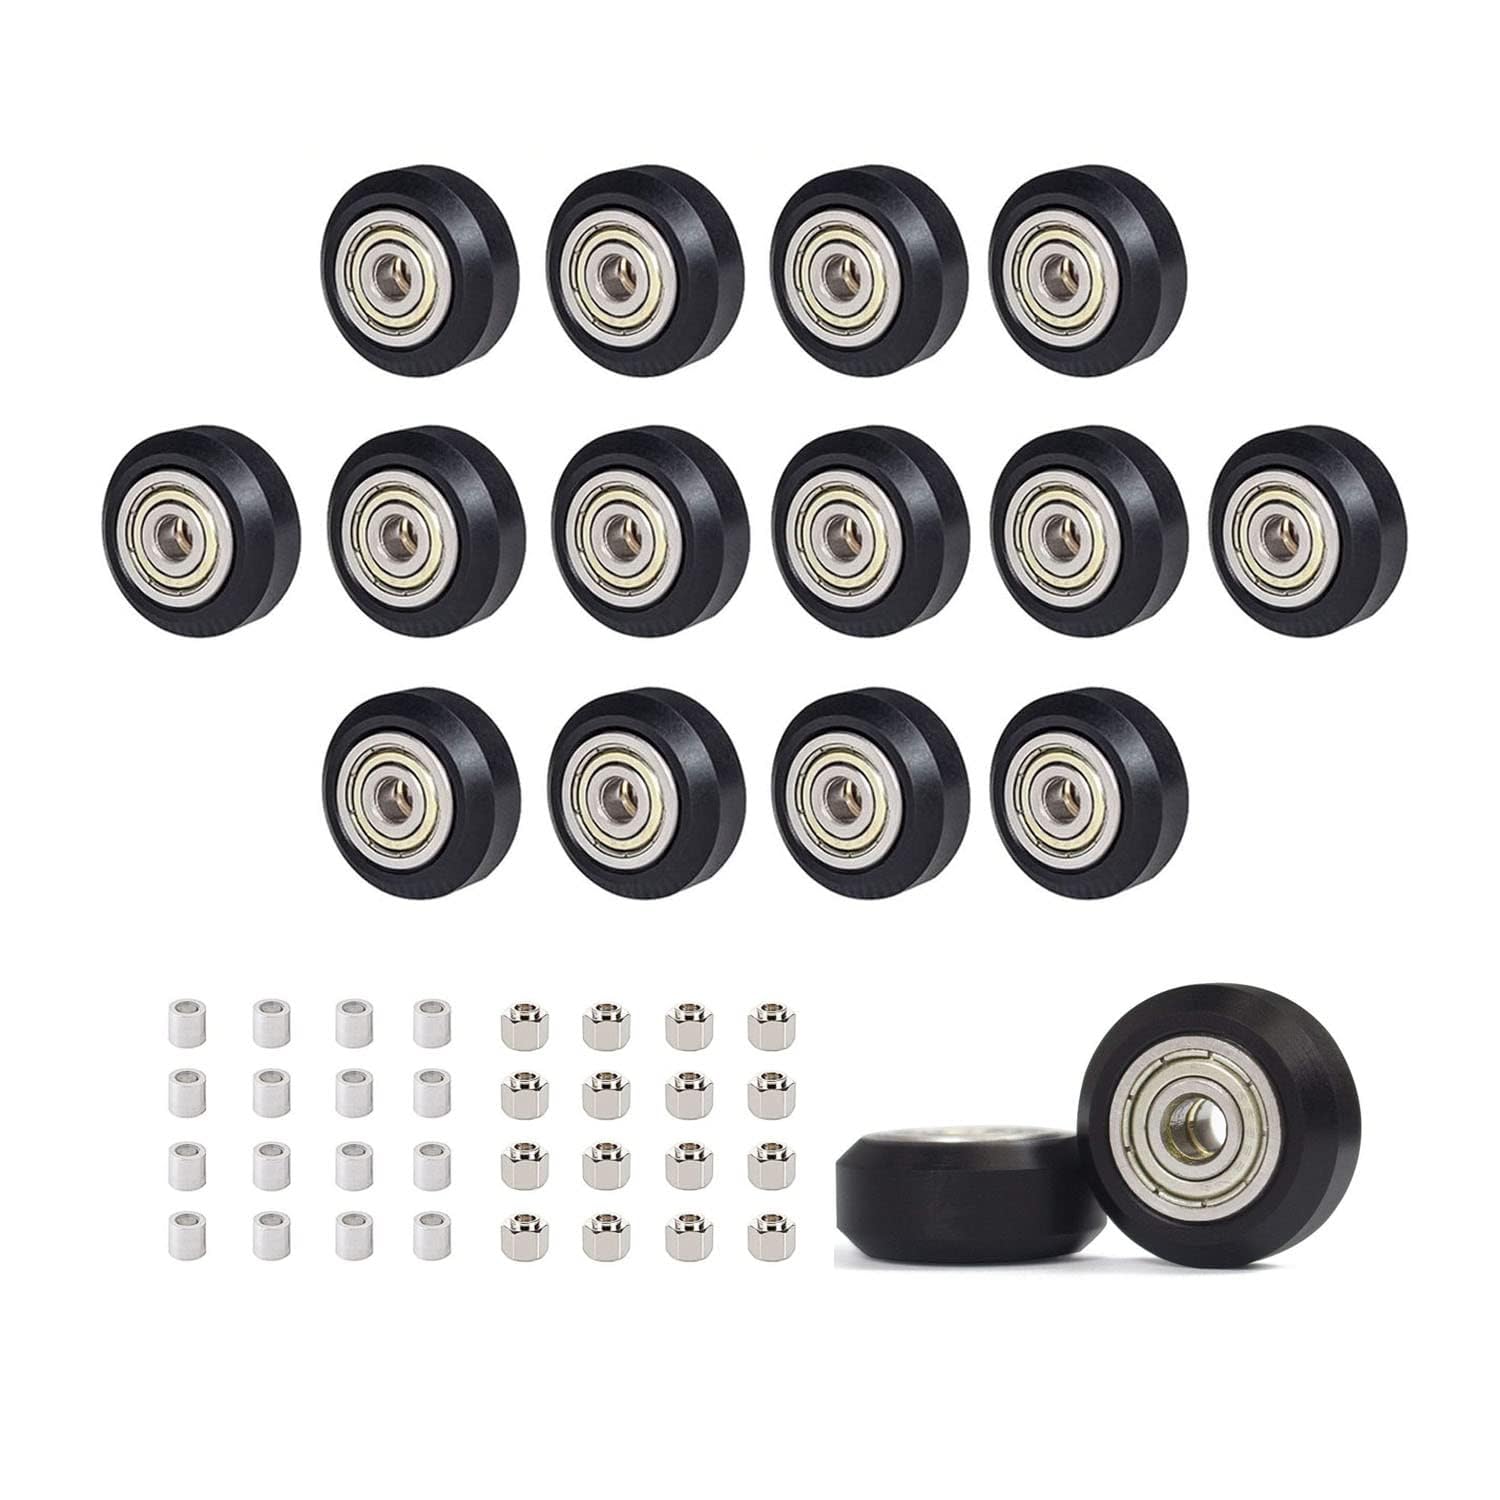 16pcs Black 3D Printer Wheels Set + 6mm Hexagonal Eccentric Nut Column & Spacers